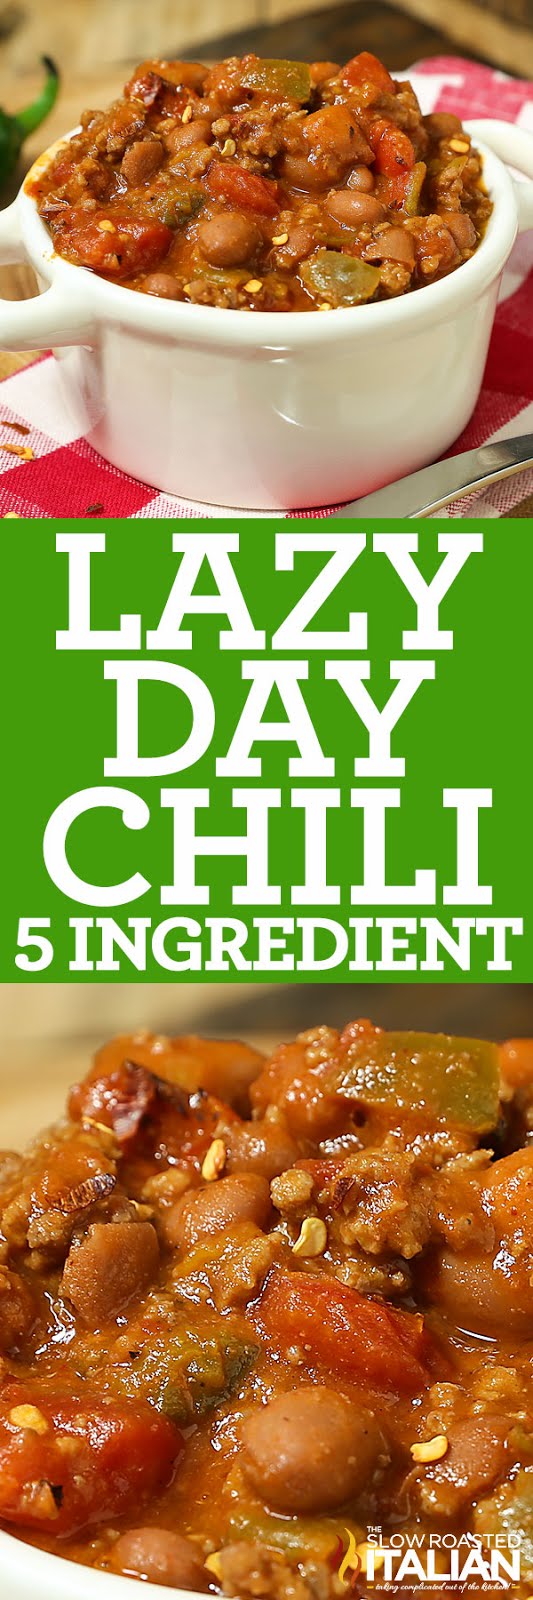 Lazy Man Chili Recipe